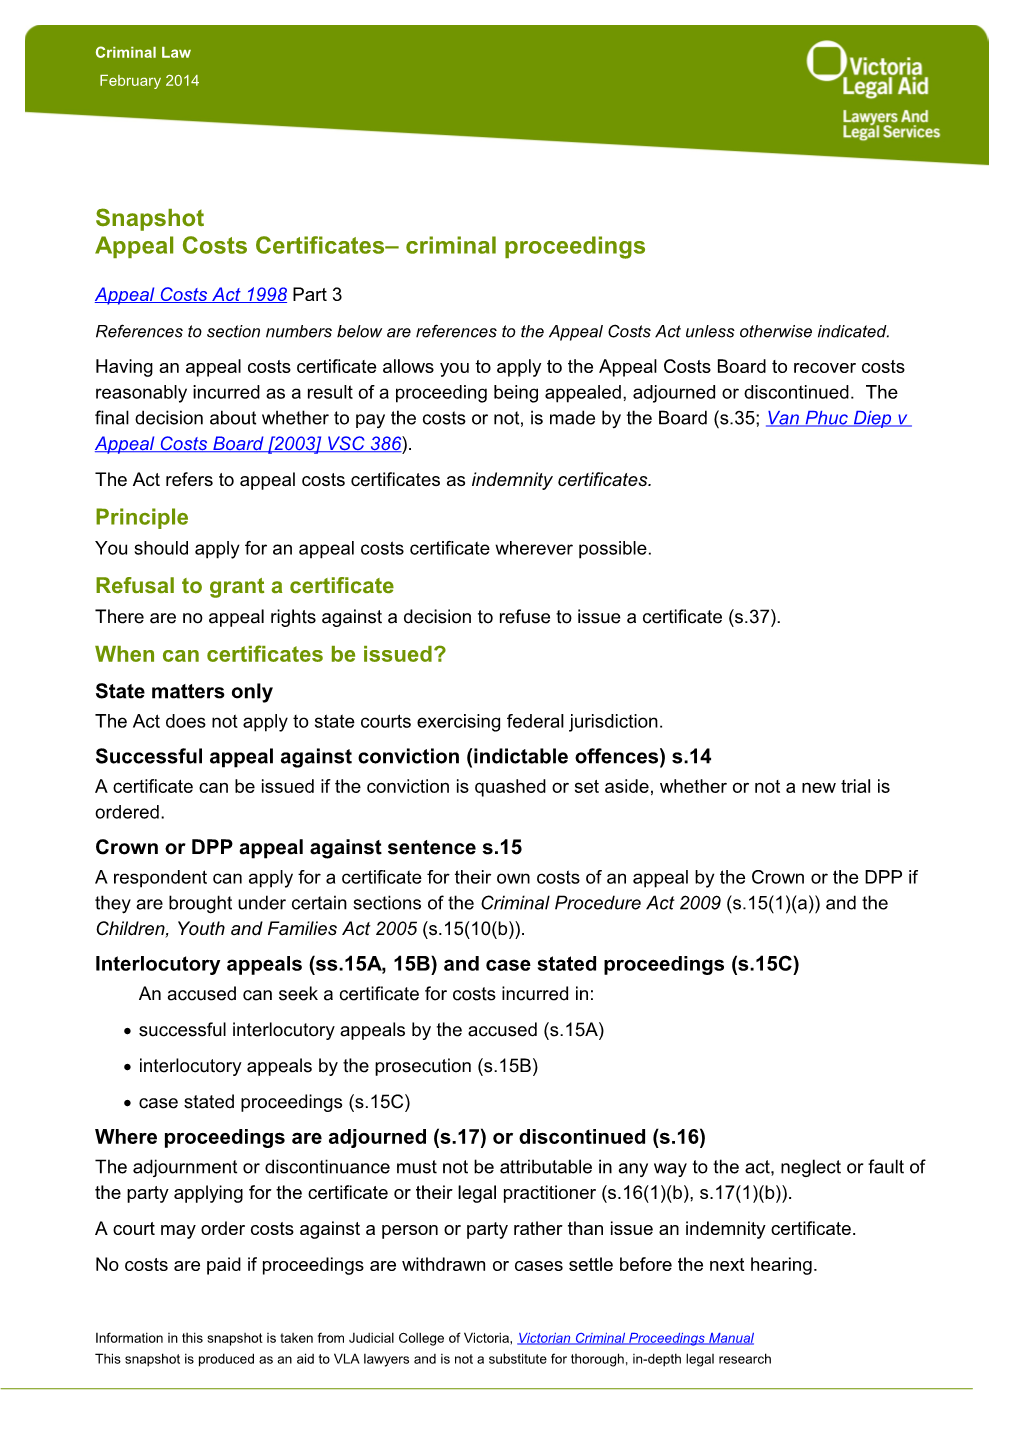 Appeal Costs Certificates Criminal Proceedings